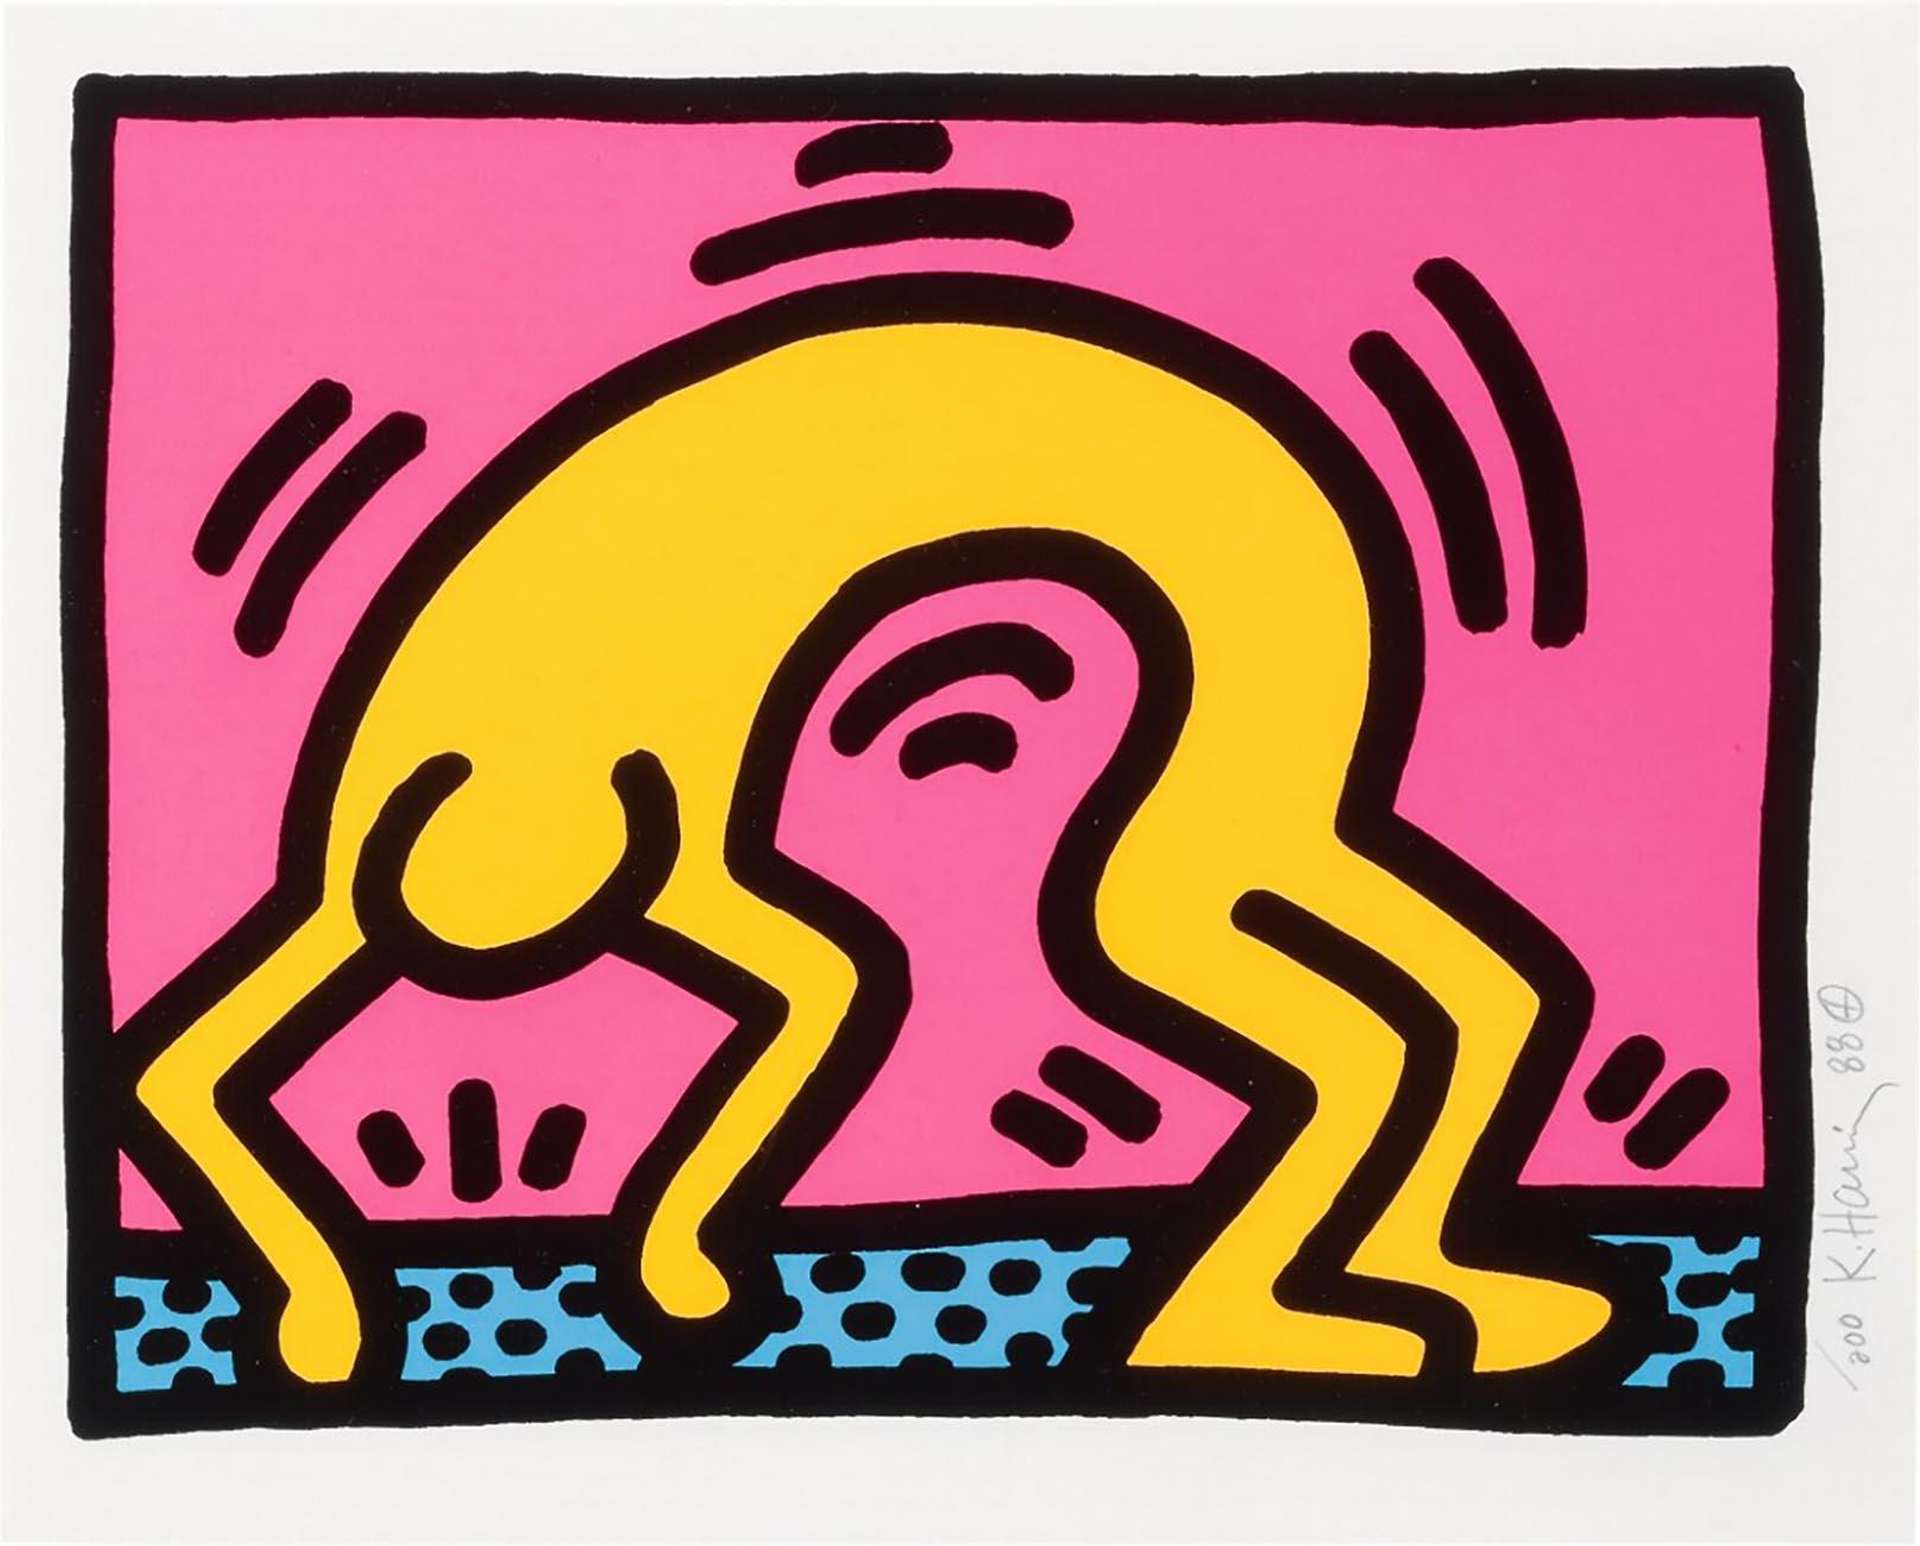 Pop Shop II, Plate III by Keith Haring